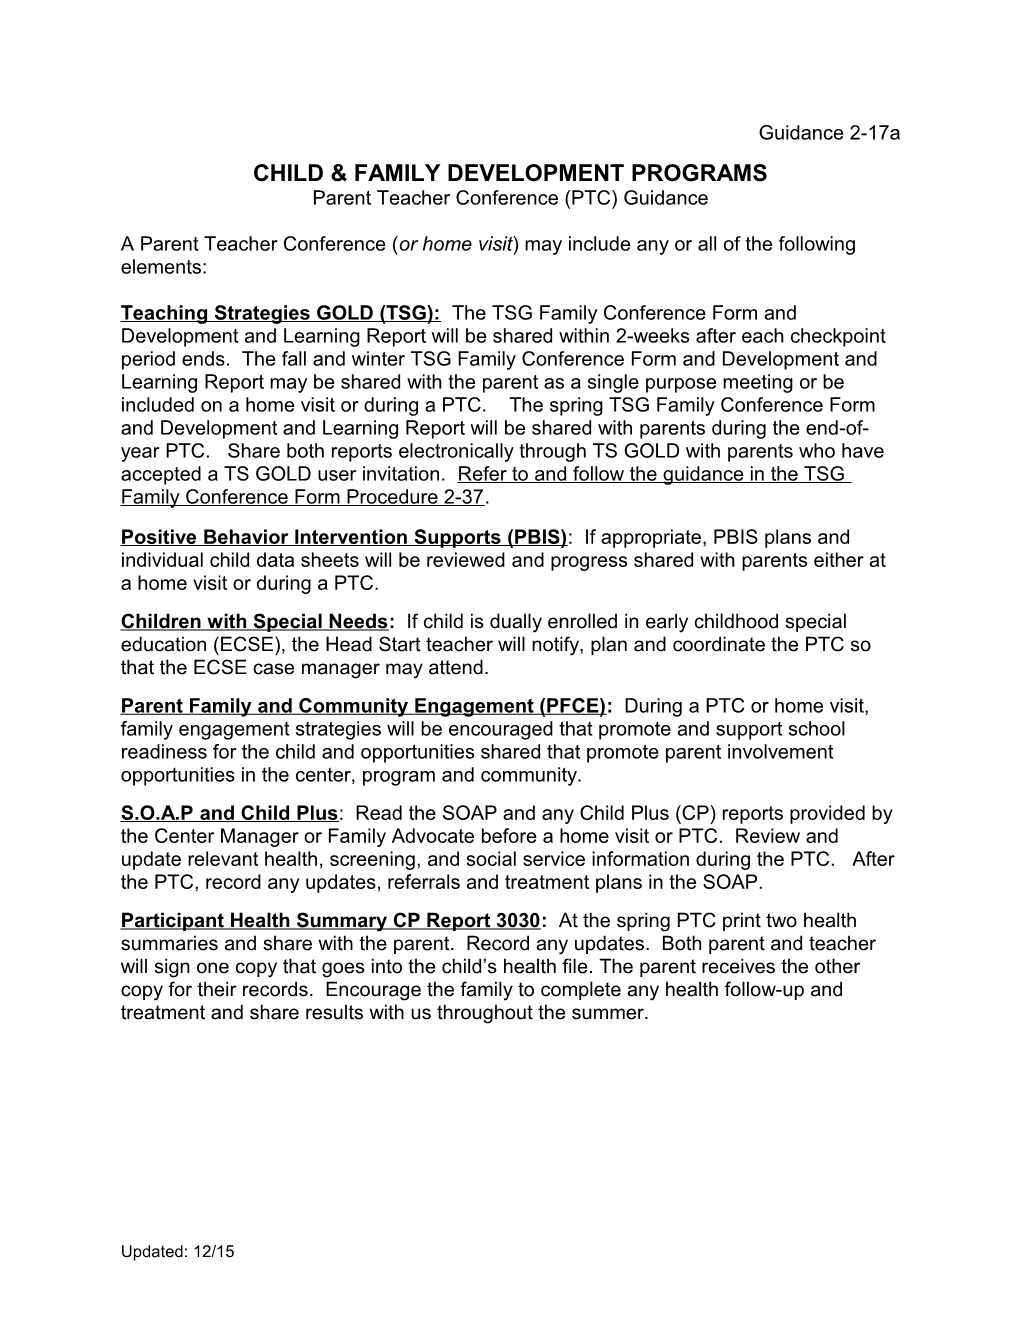 Child & Family Development Programs s2